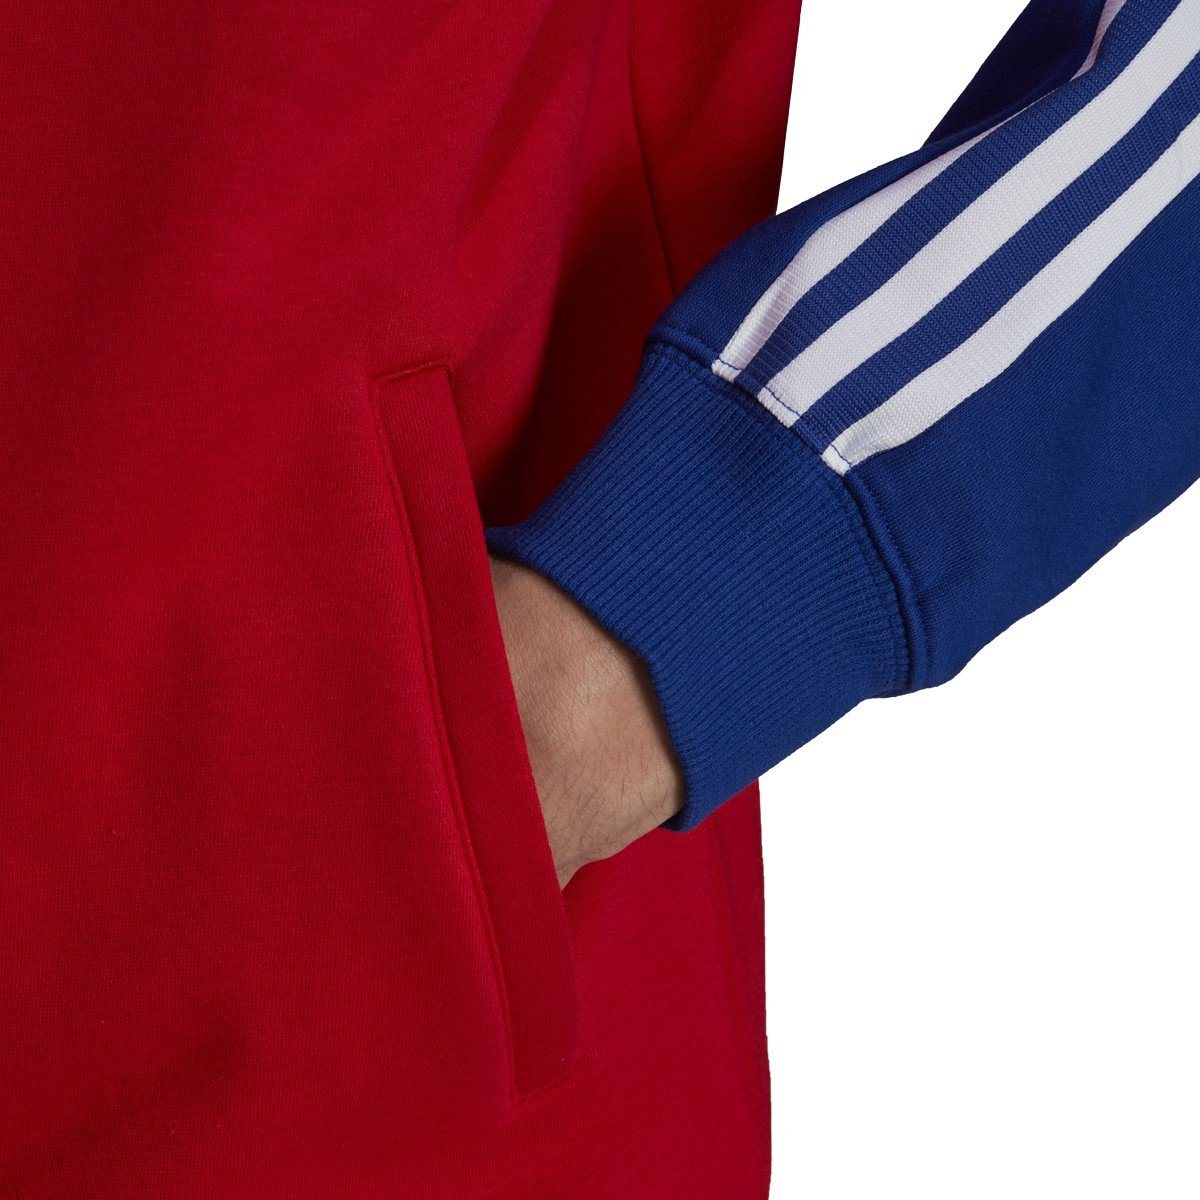 adidas Men's Fc Bayern 21/22 Anthem Jacket | H67174 Jacket Adidas 